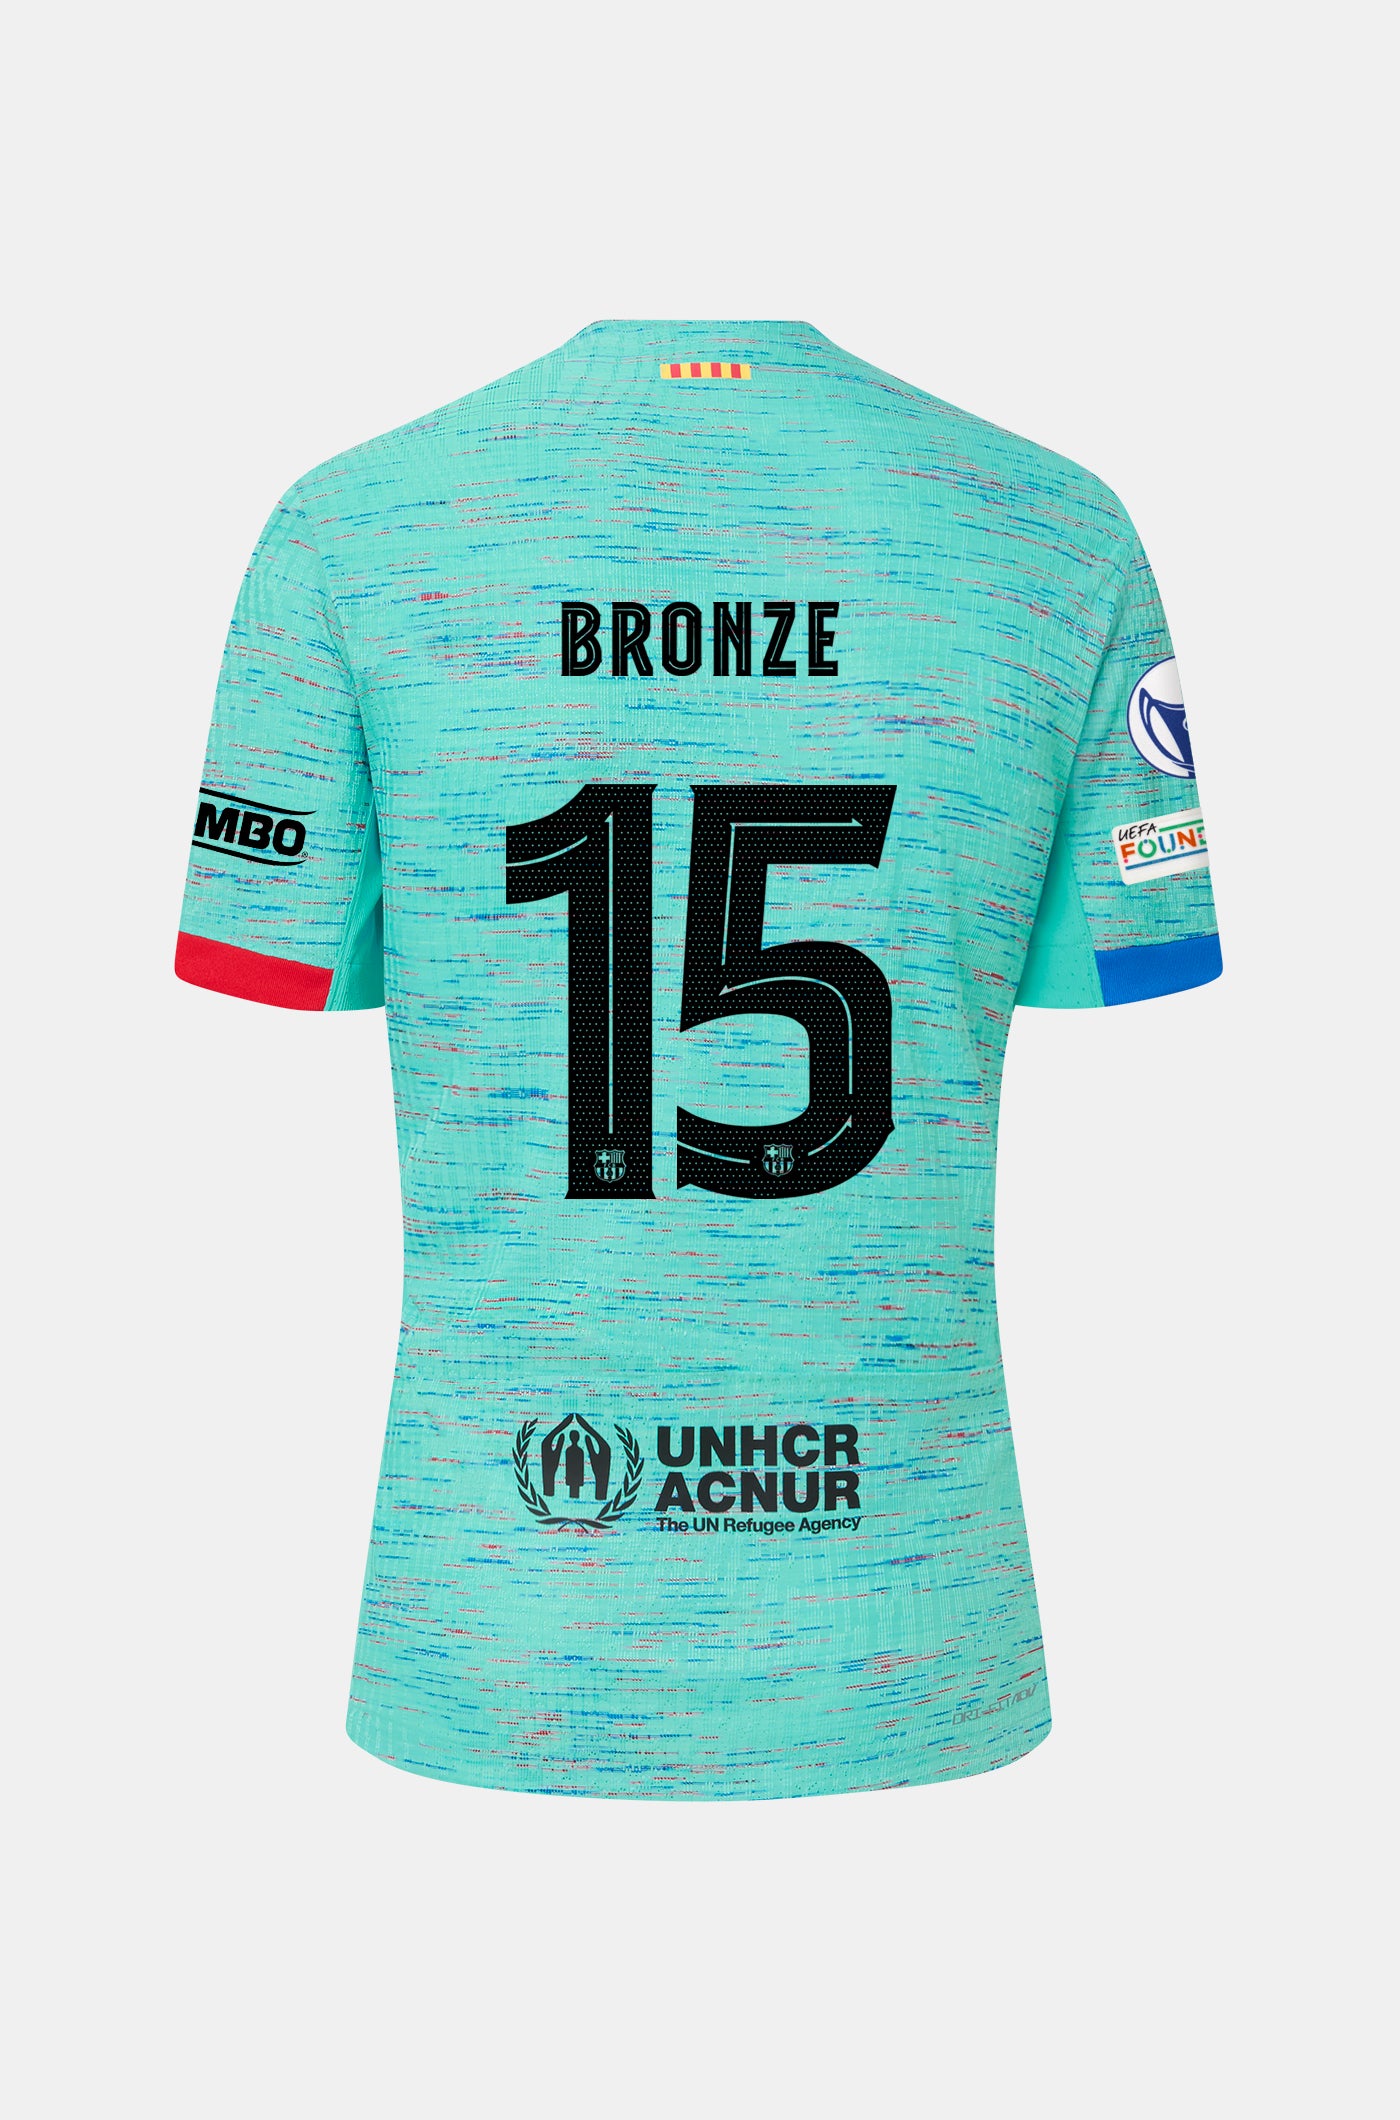 UWCL FC Barcelona third shirt 23/24 Player's Edition - BRONZE